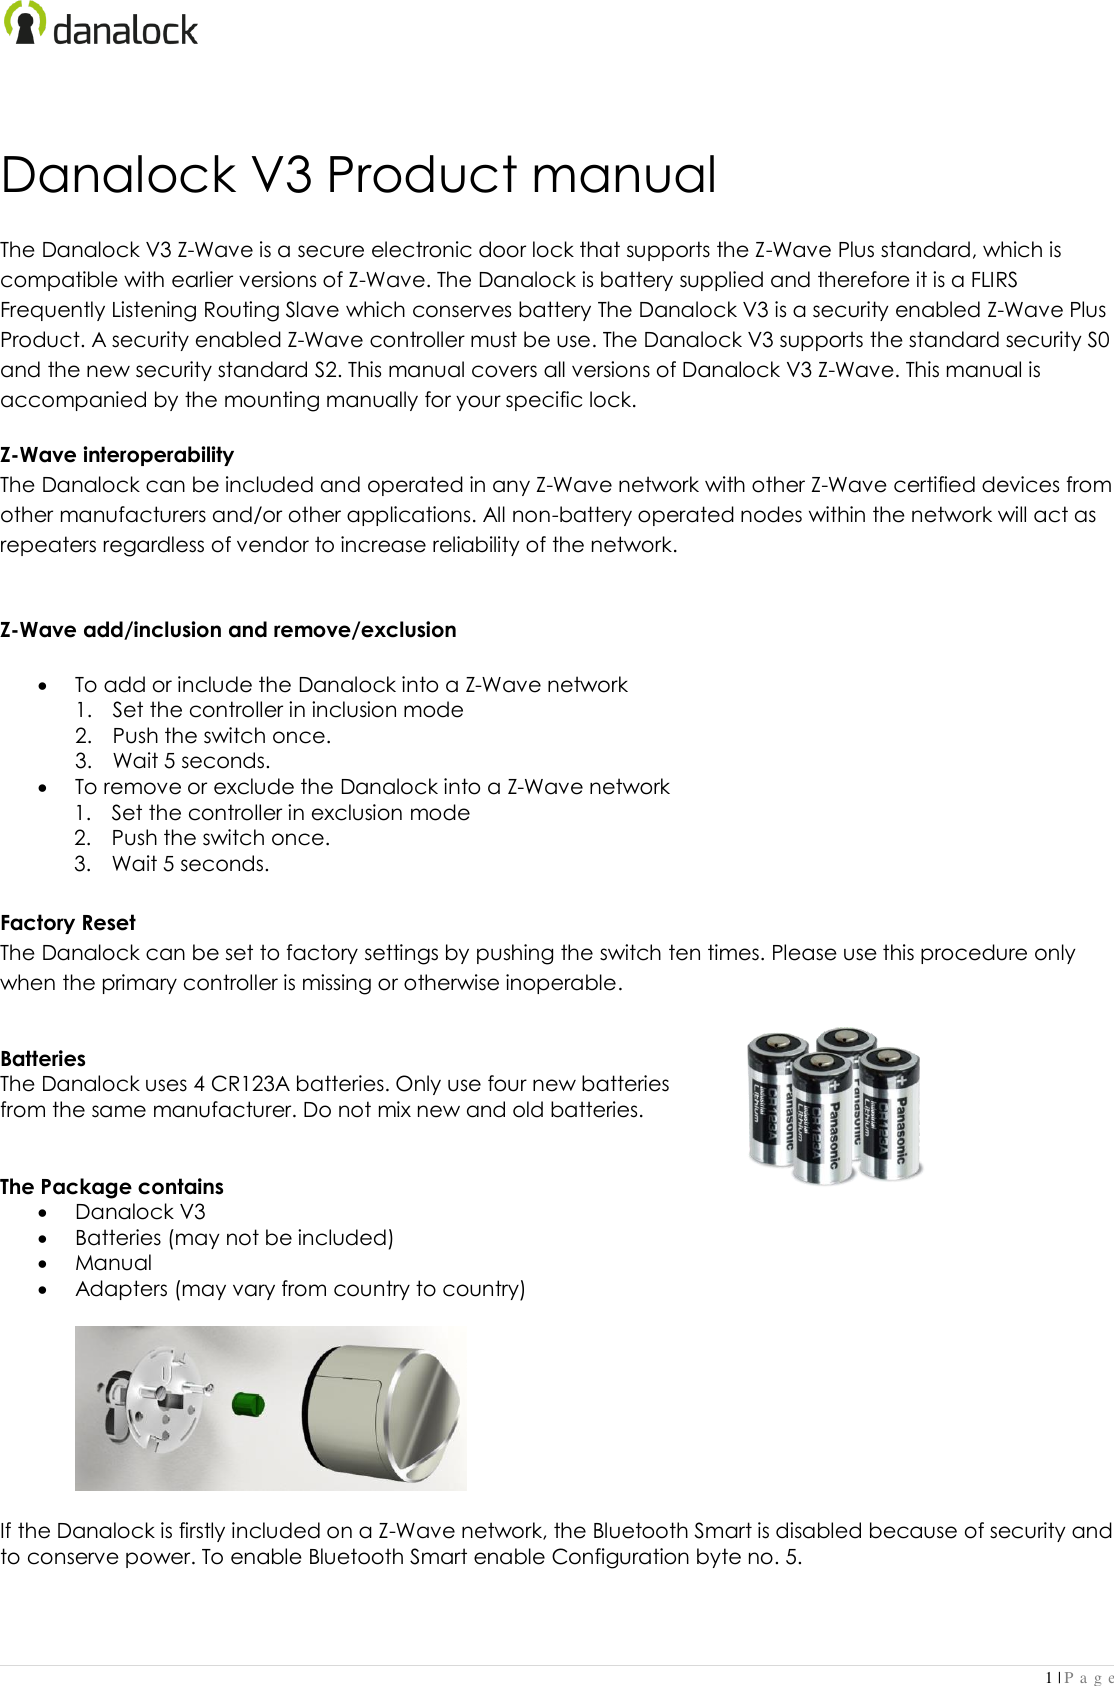 Page 1 of 6 - Danalock V3 Product Manual Z Wave V 0.9.1